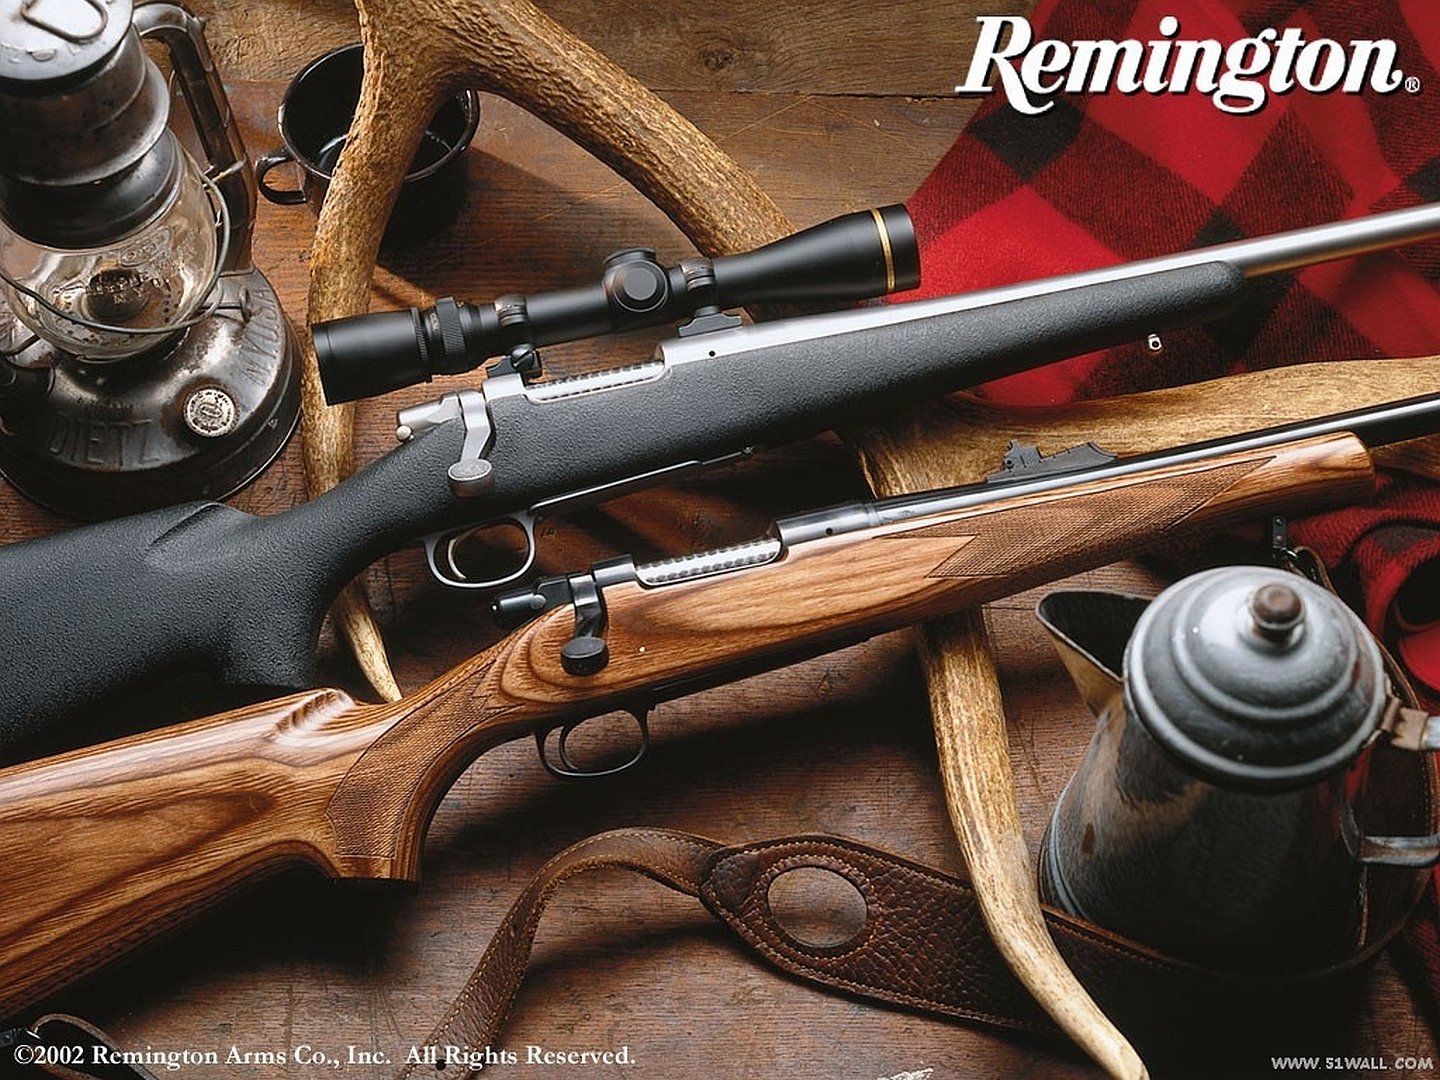 Remington Rifle HD Wallpaper Background Image